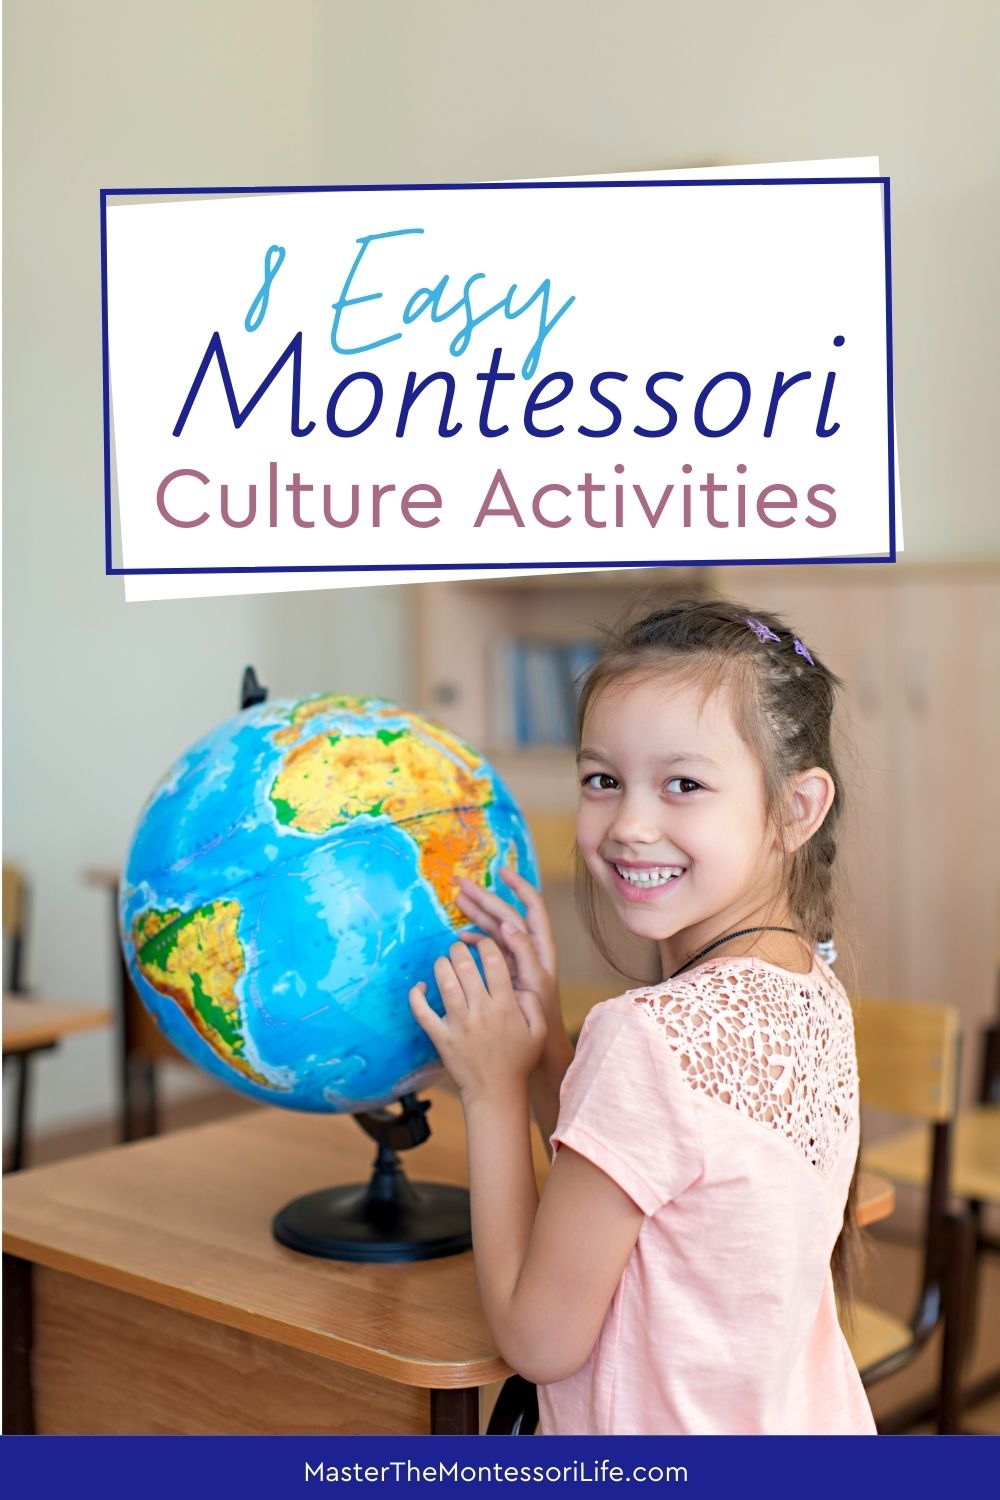 8 Easy Montessori Culture Activities